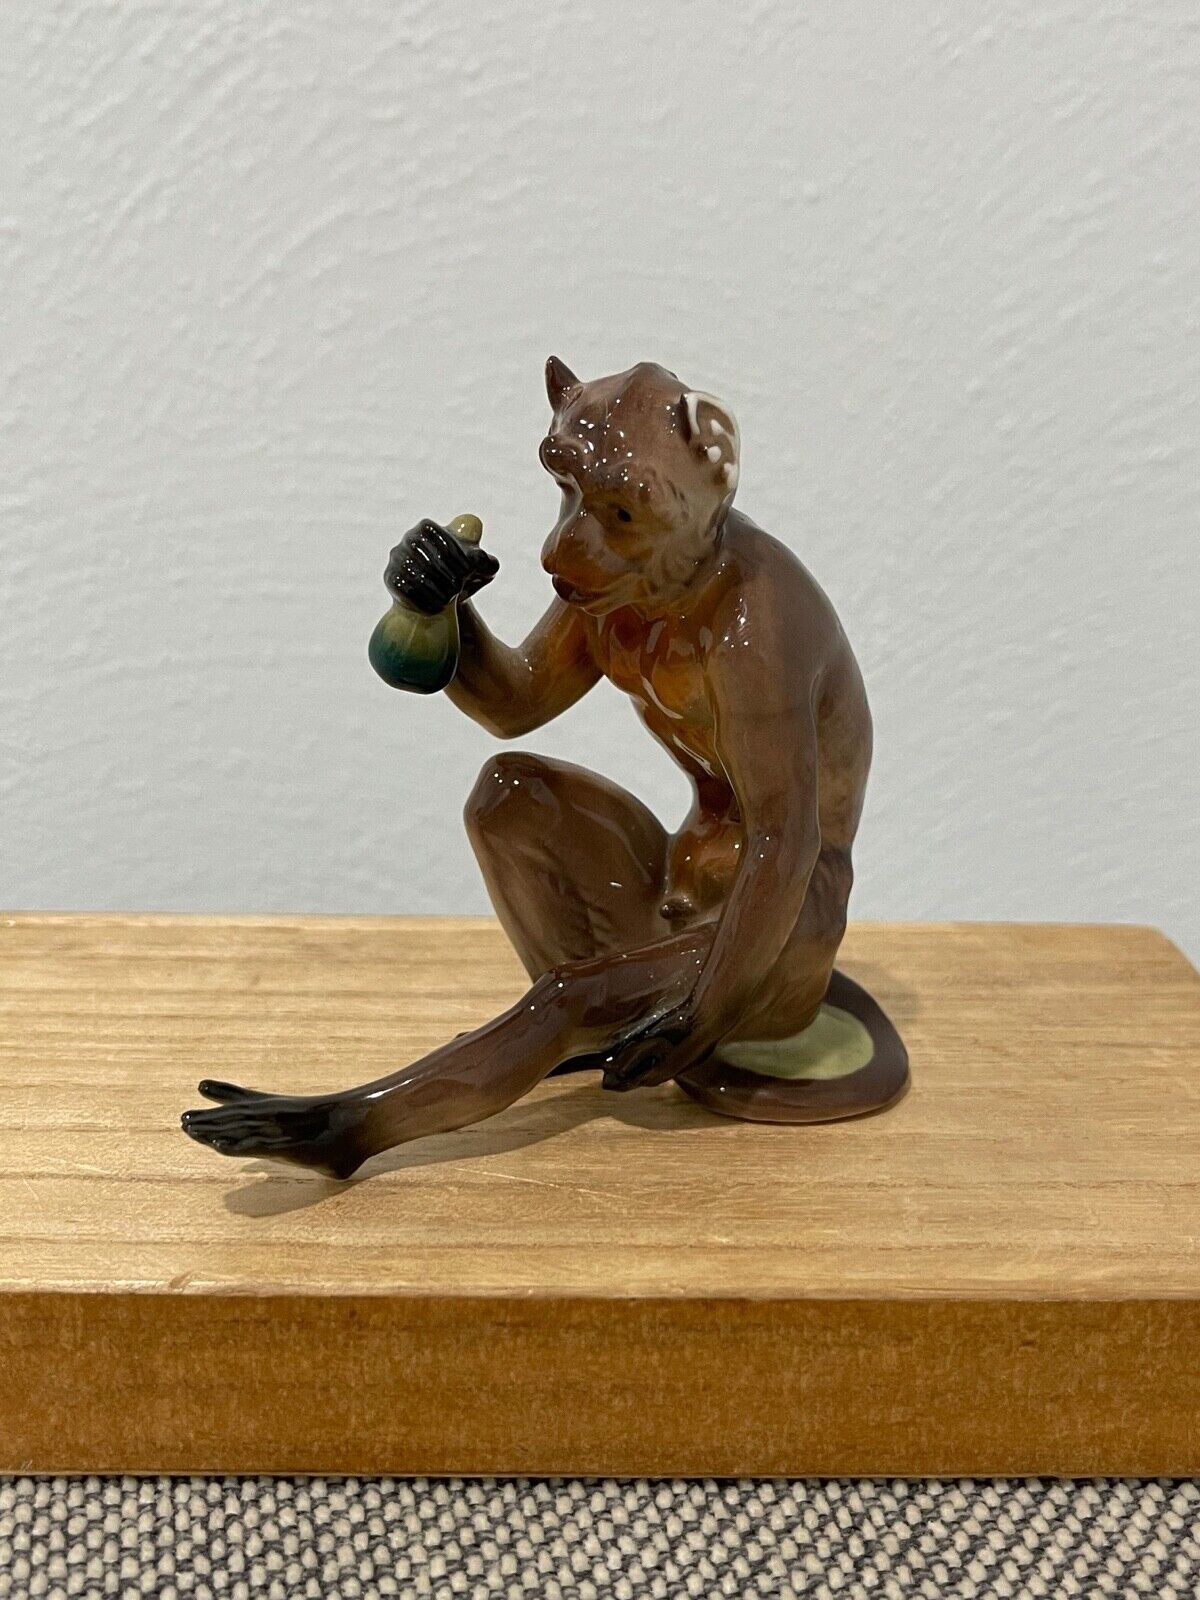 Antique German Nymphenburg Porcelain Figurine of Monkey Drinking From Gourd